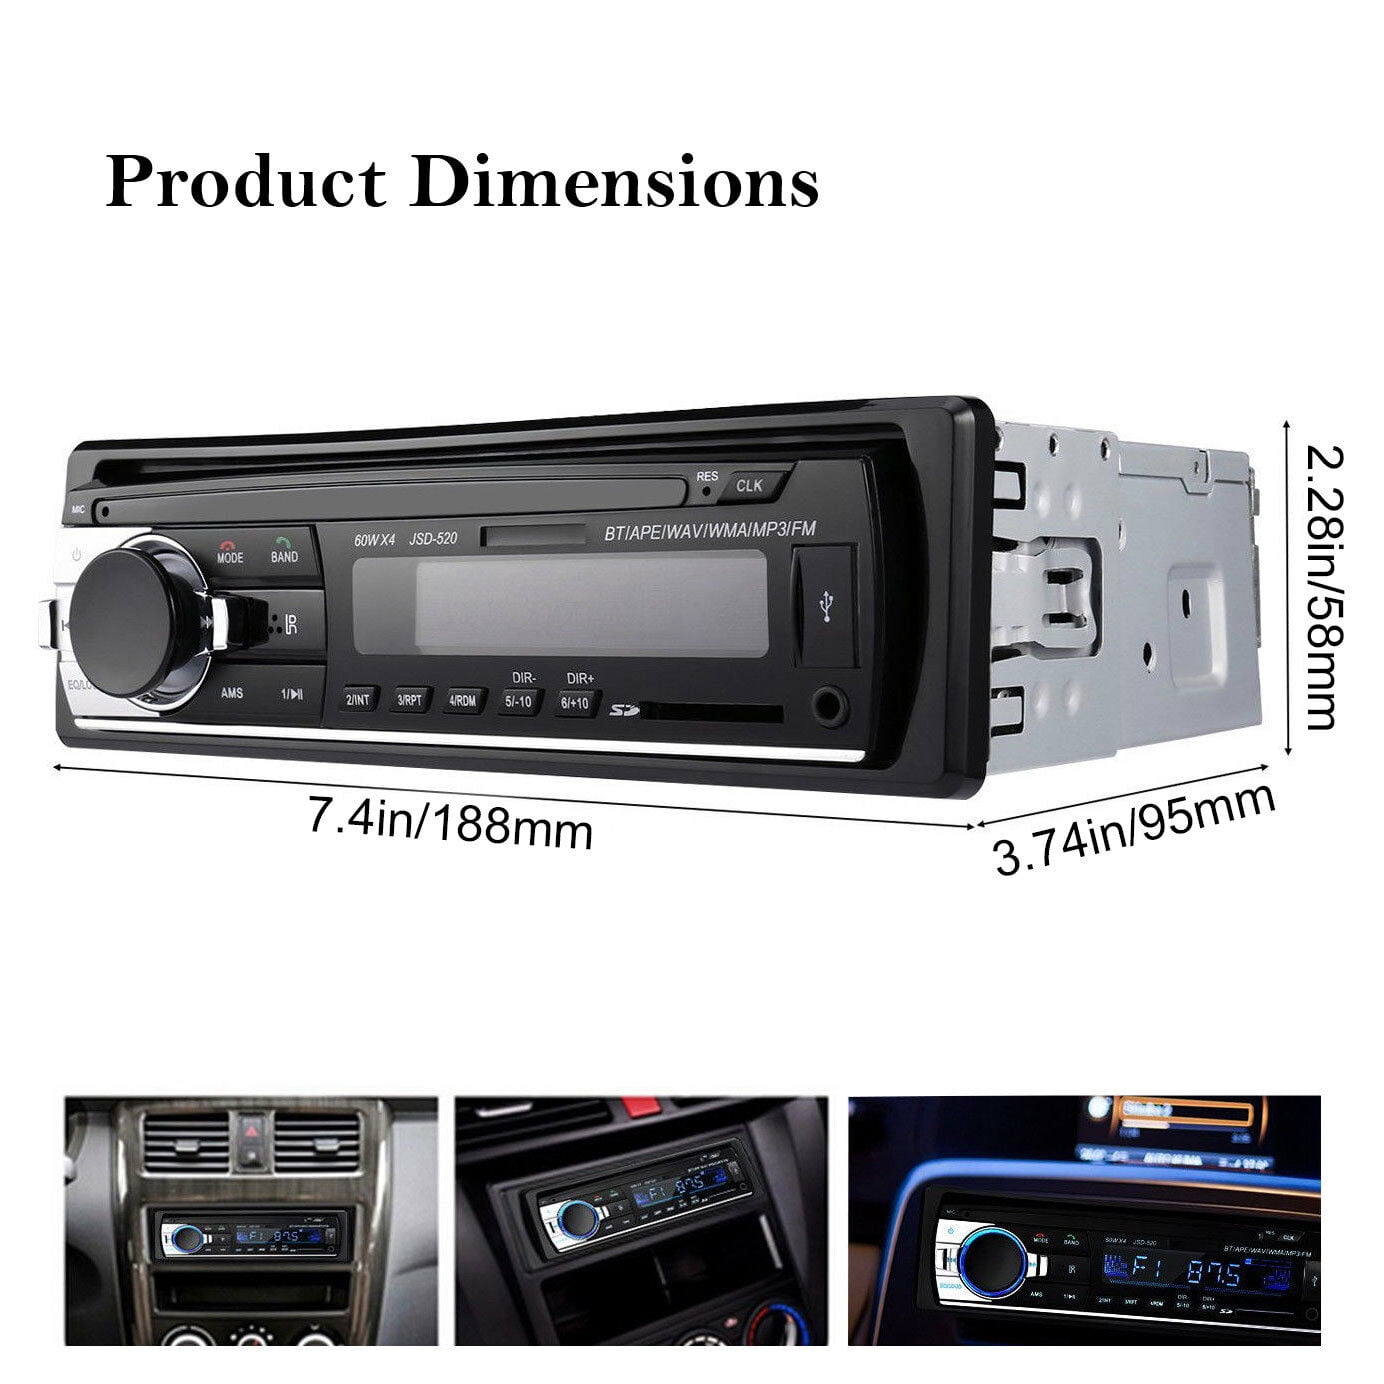 Dansrueus Car Stereo with Bluetooth Universal in-Dash Single Din Car Radio Receiver MP3 Player/USB/SD Card/AUX/FM Radio with Remote Control BK 